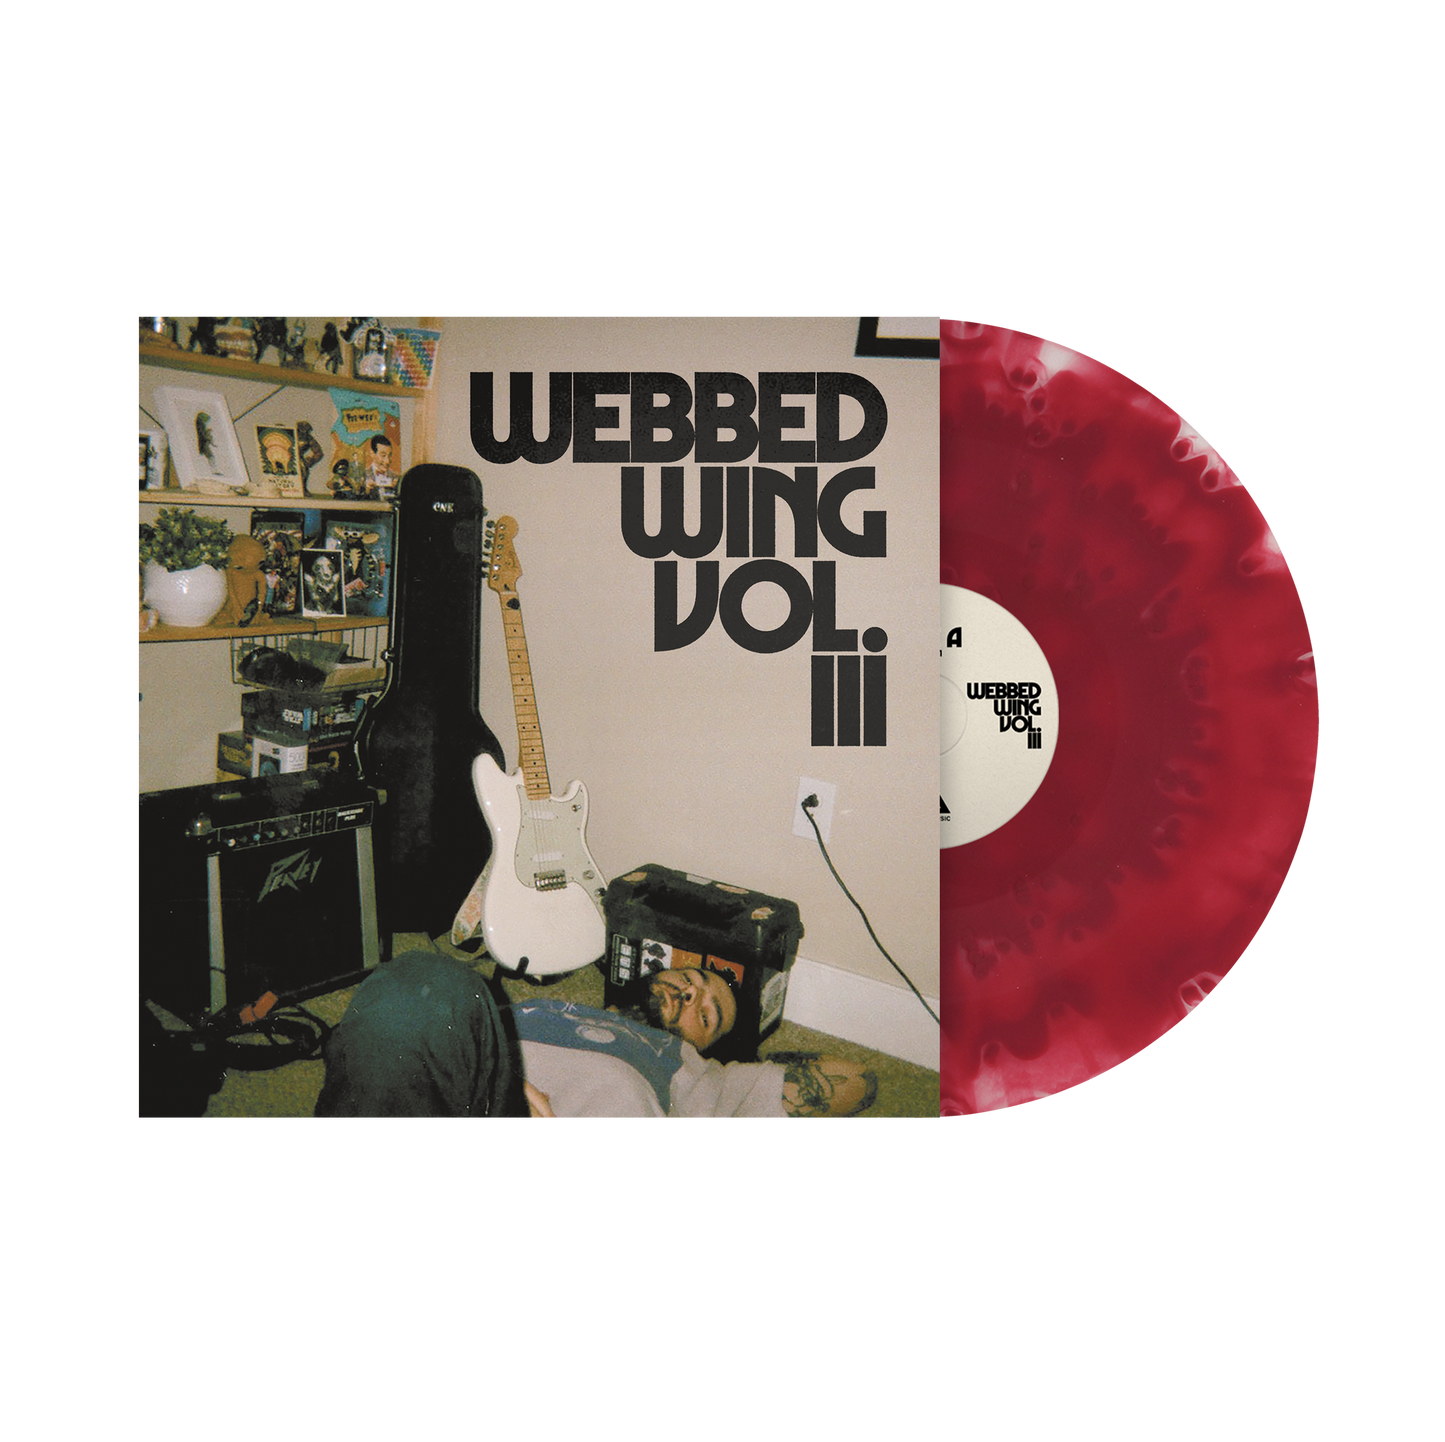 Webbed Wing "Vol. III" LP